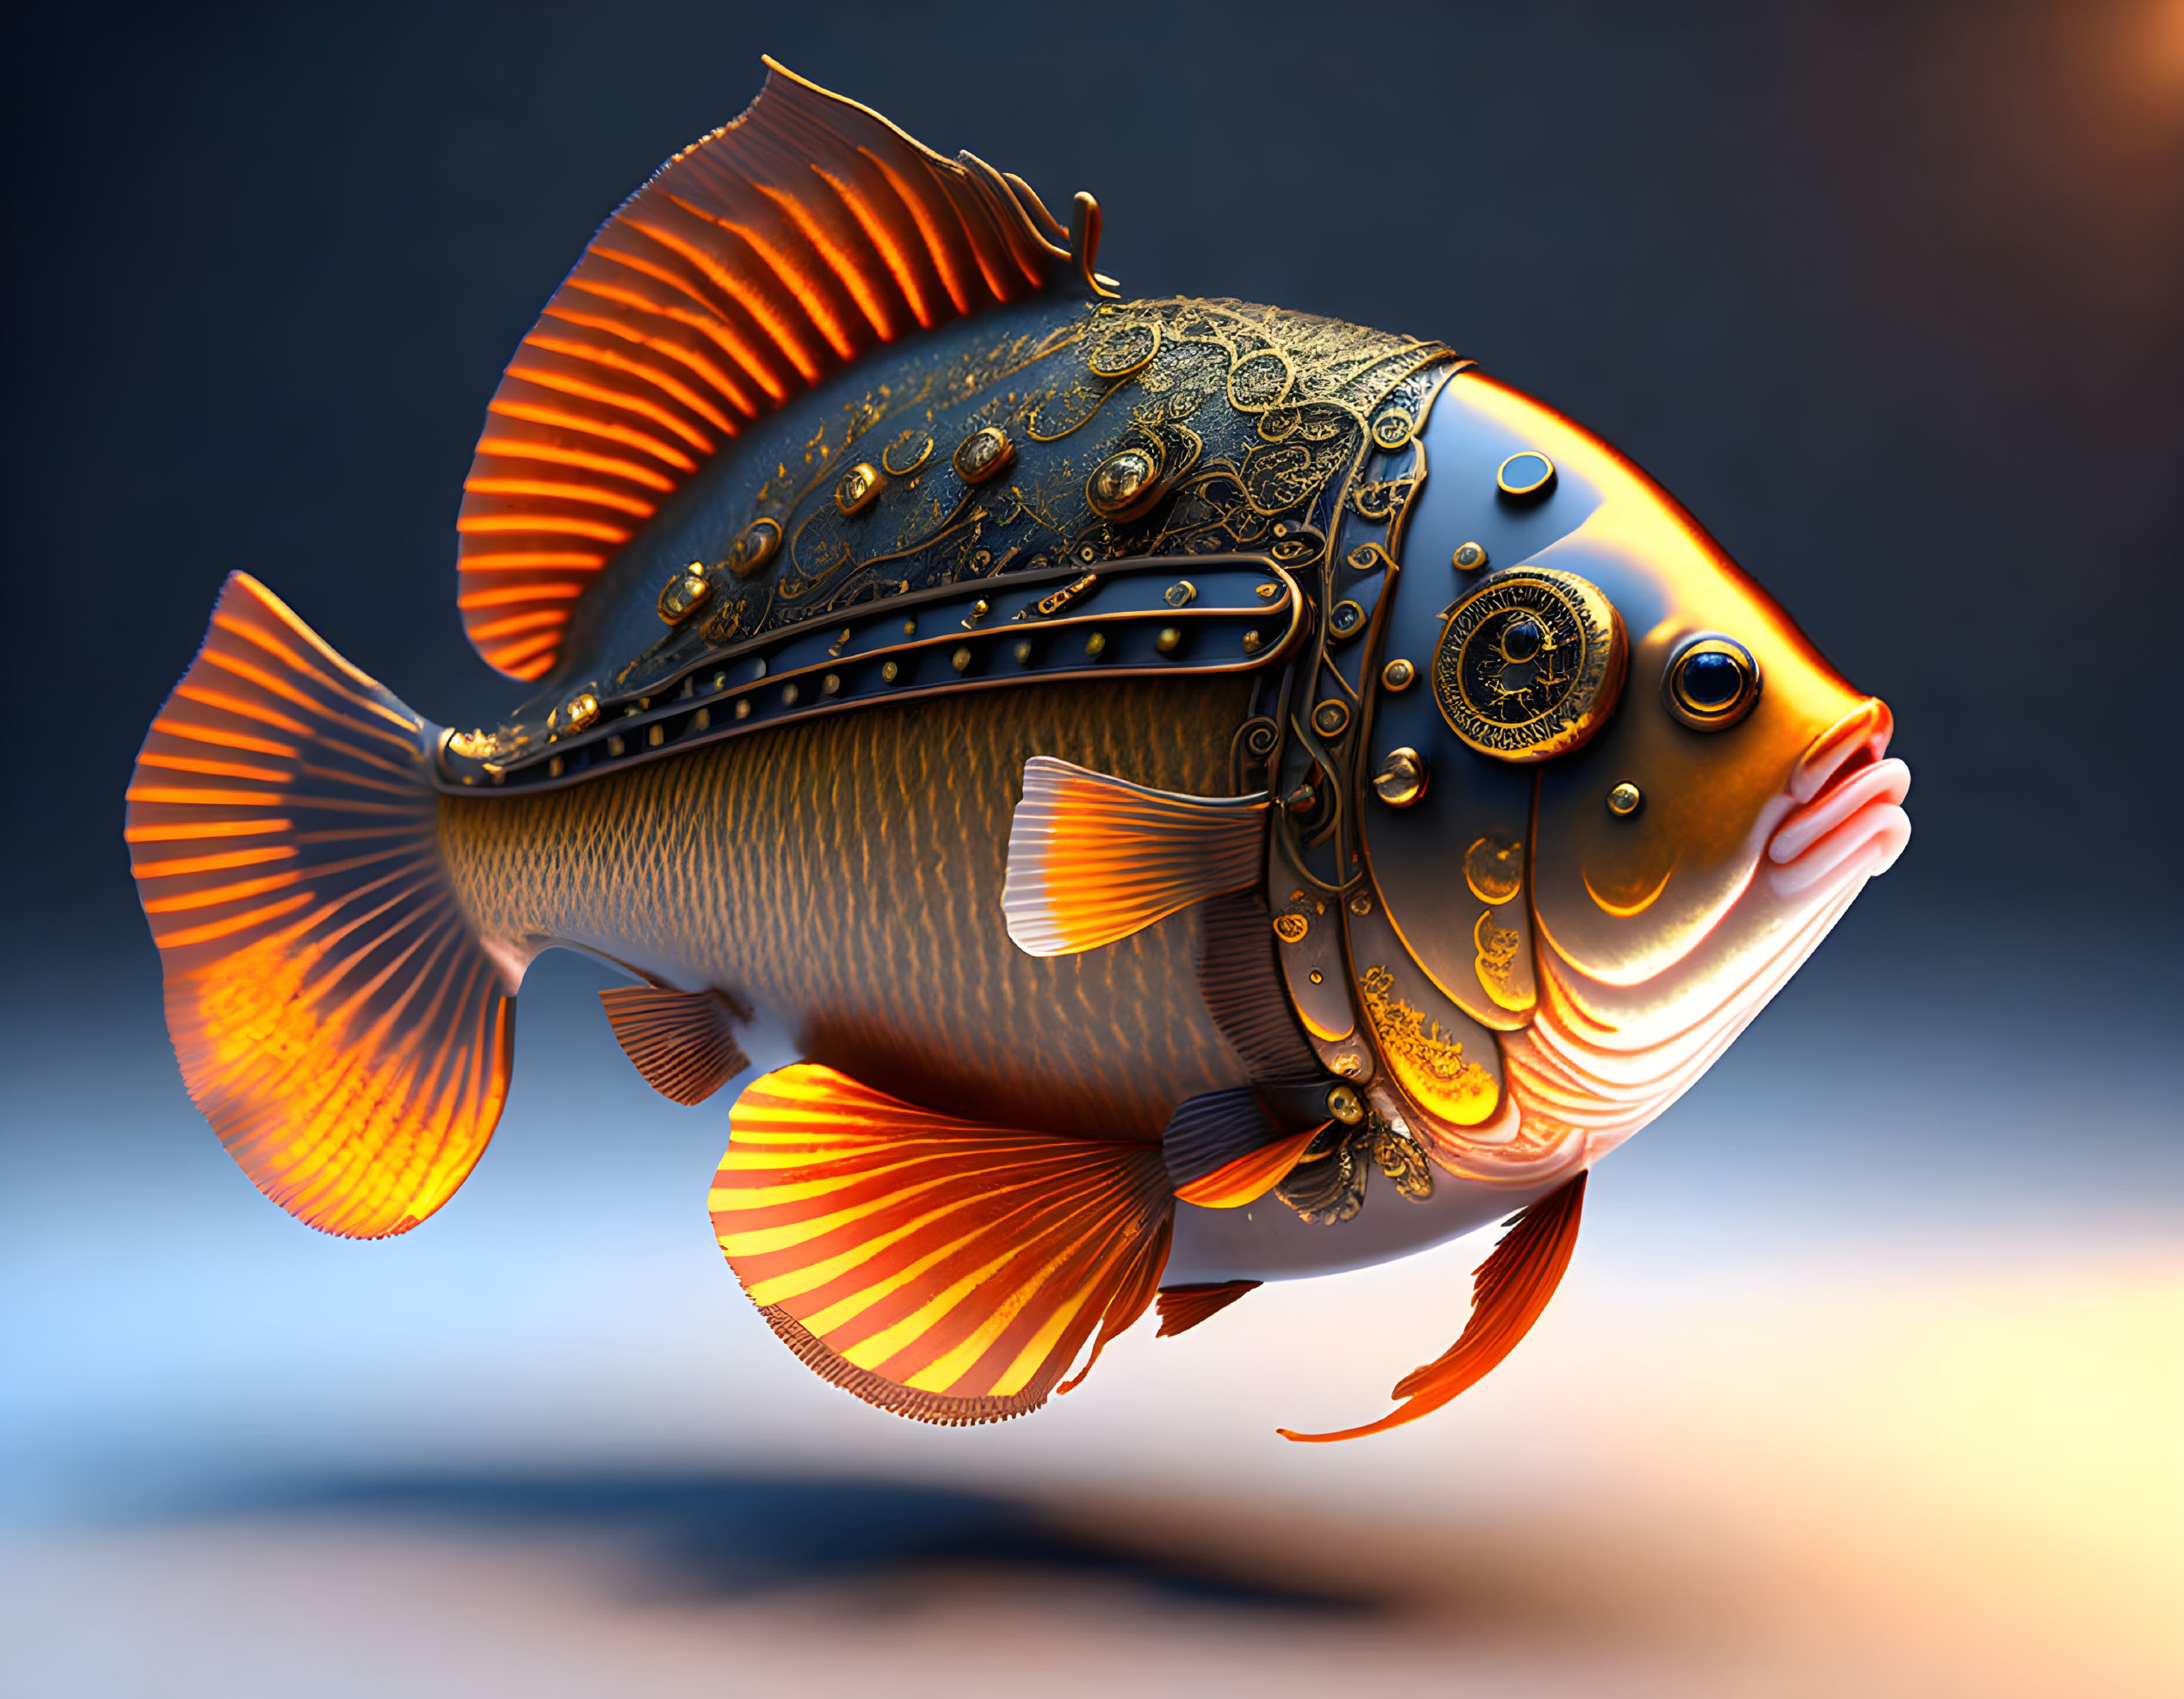 A steampunk goldfish